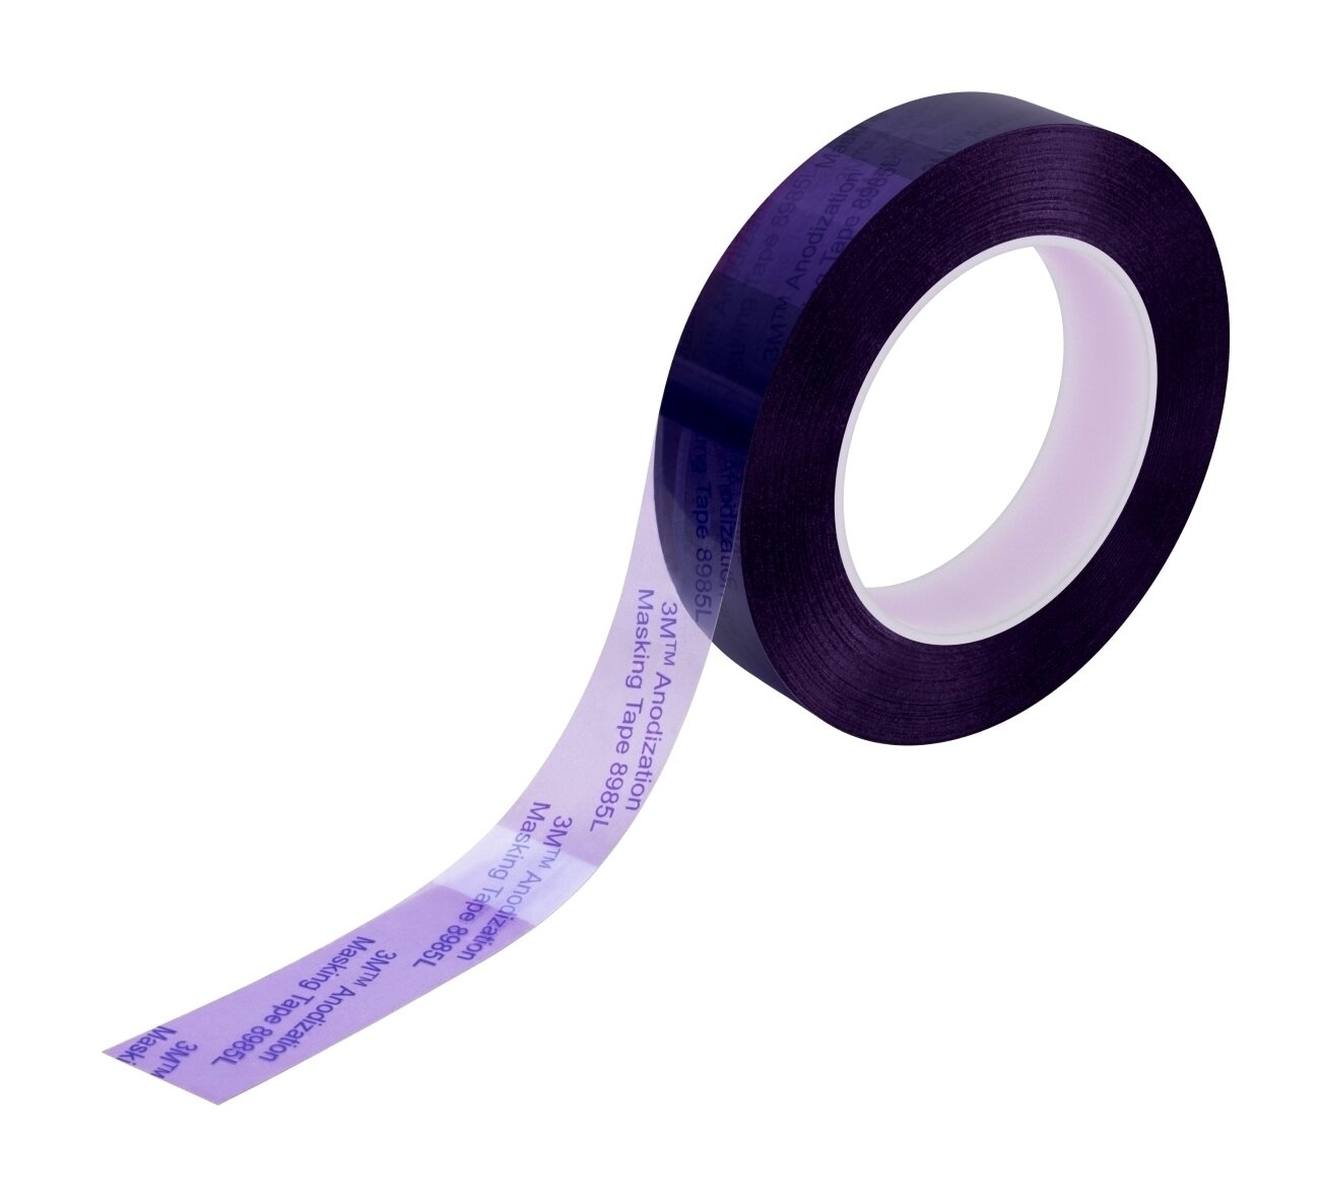 3M ruban adhésif de masquage en polyester Anodization Masking Tape 8985L, violet, 15 mm x 66 m